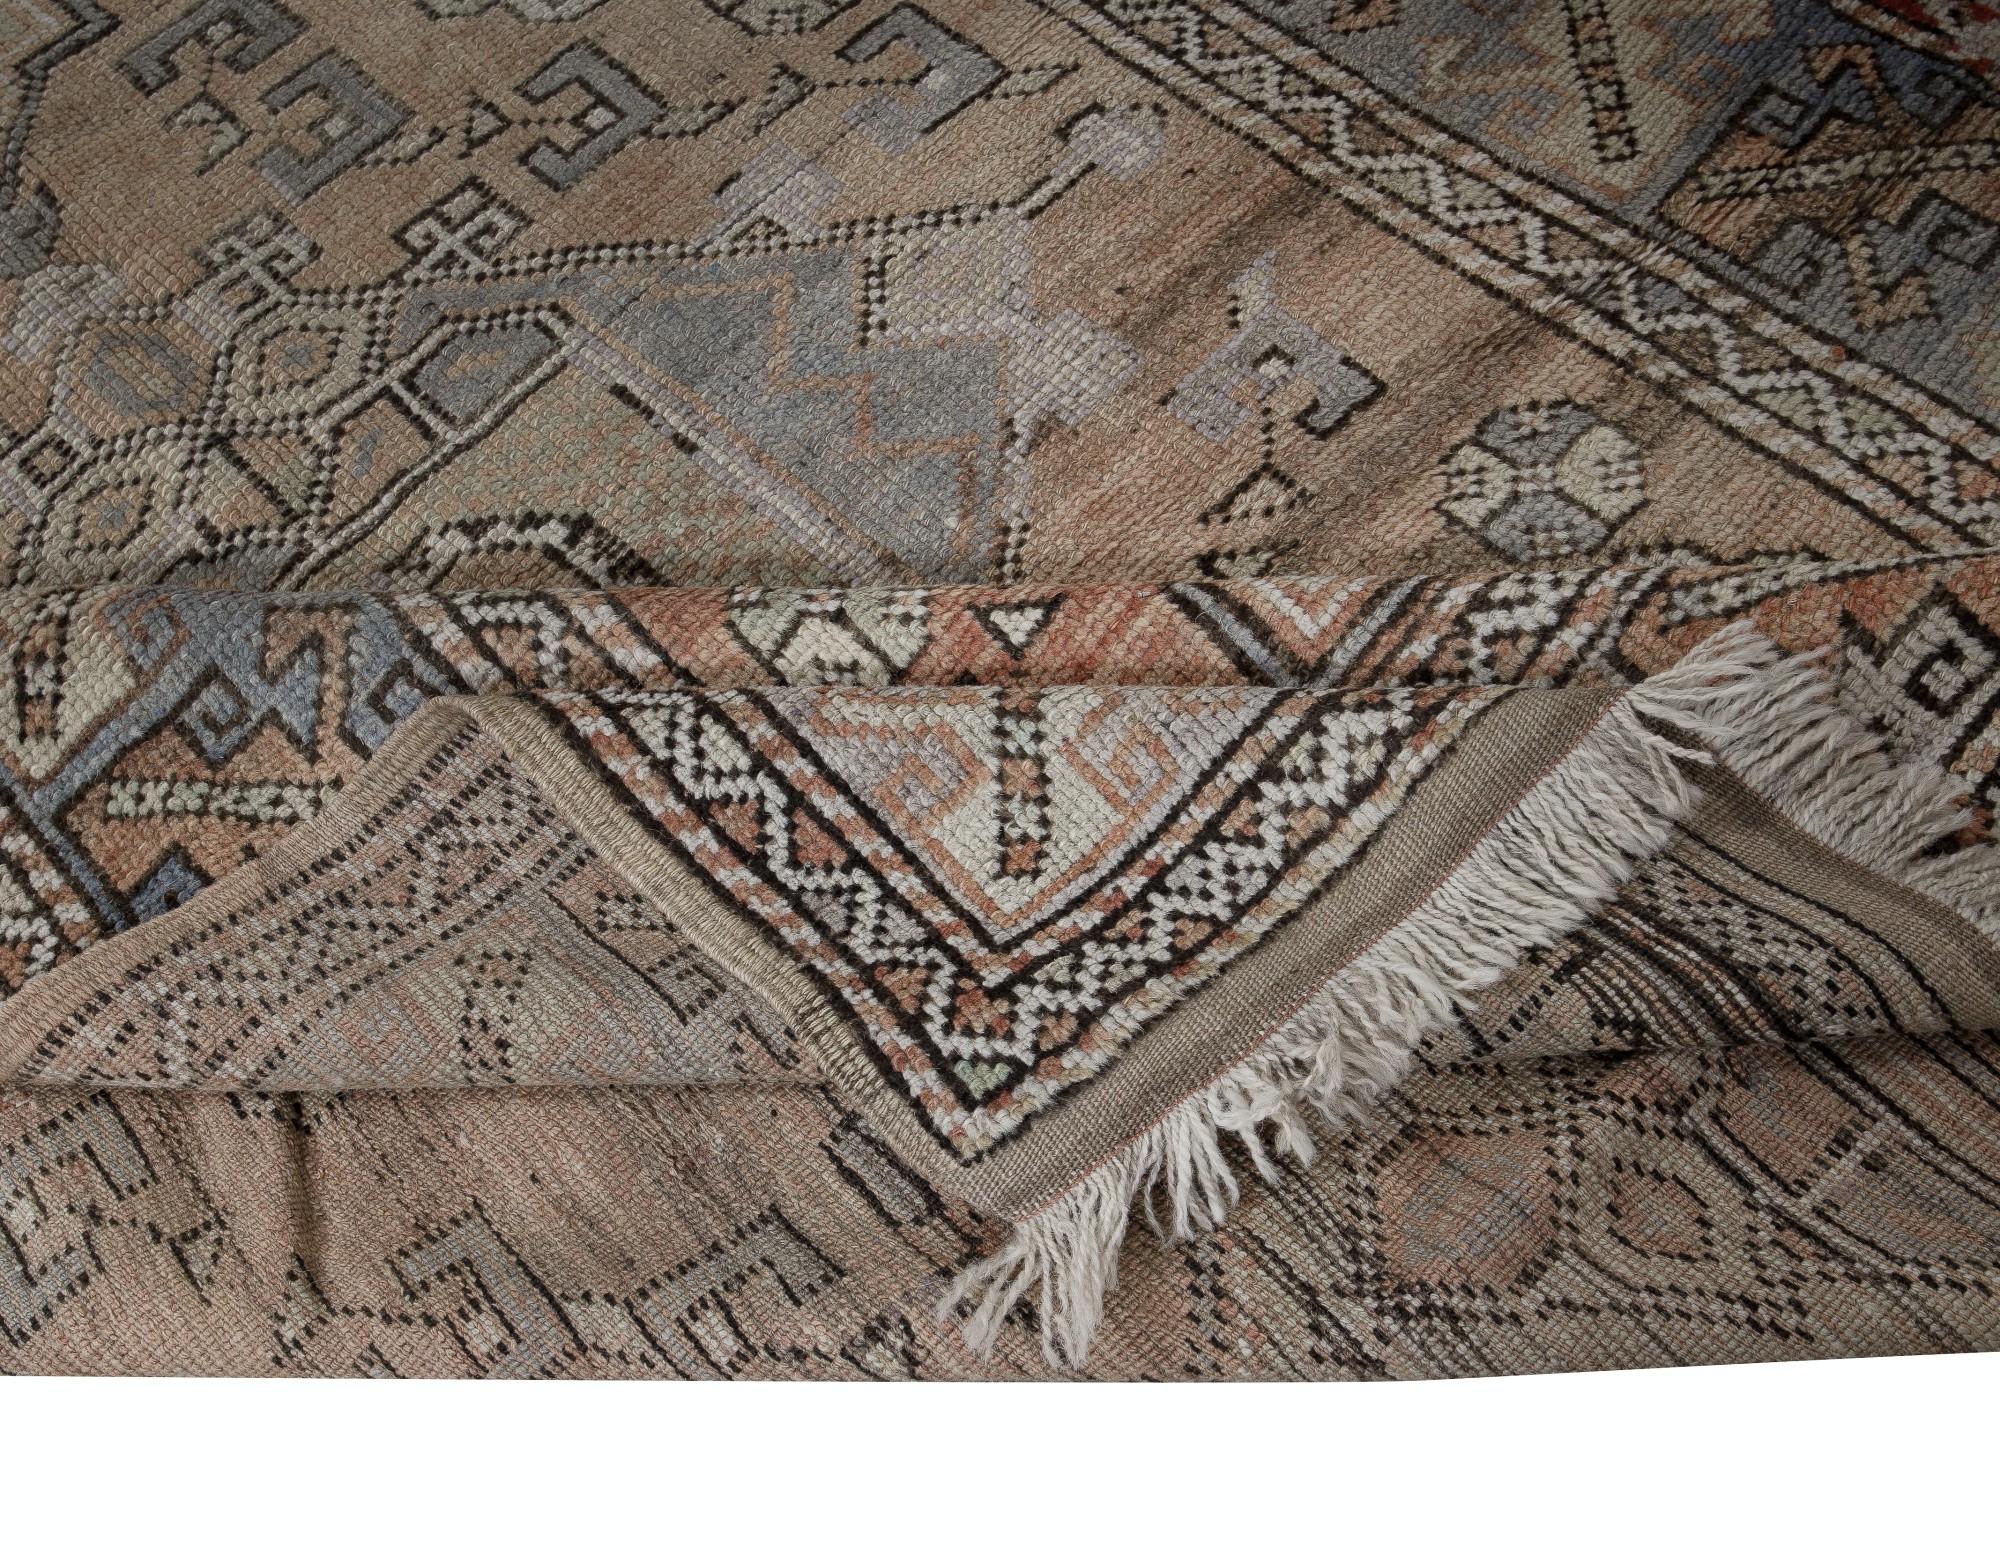 Tribal 4.8x6 Ft Vintage Handmade Anatolian Wool Area Rug with Geometric Design For Sale